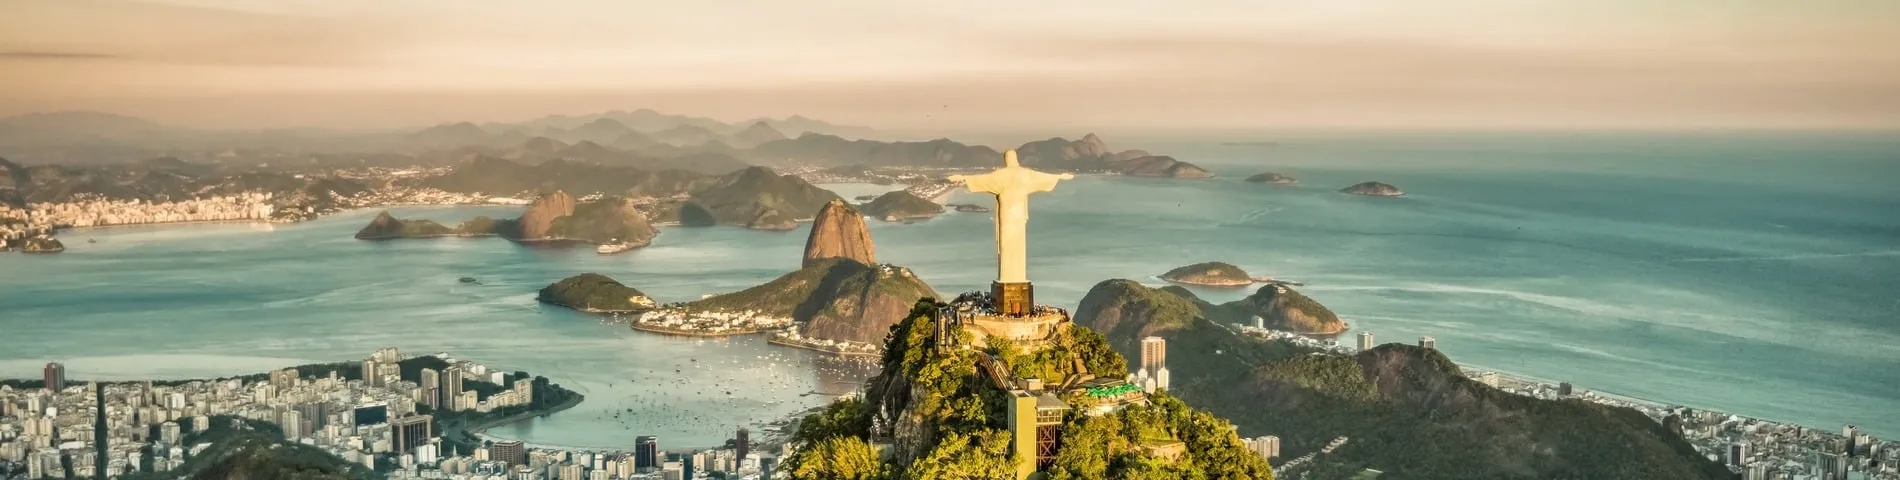 Rio de Janeiro - Muut testit